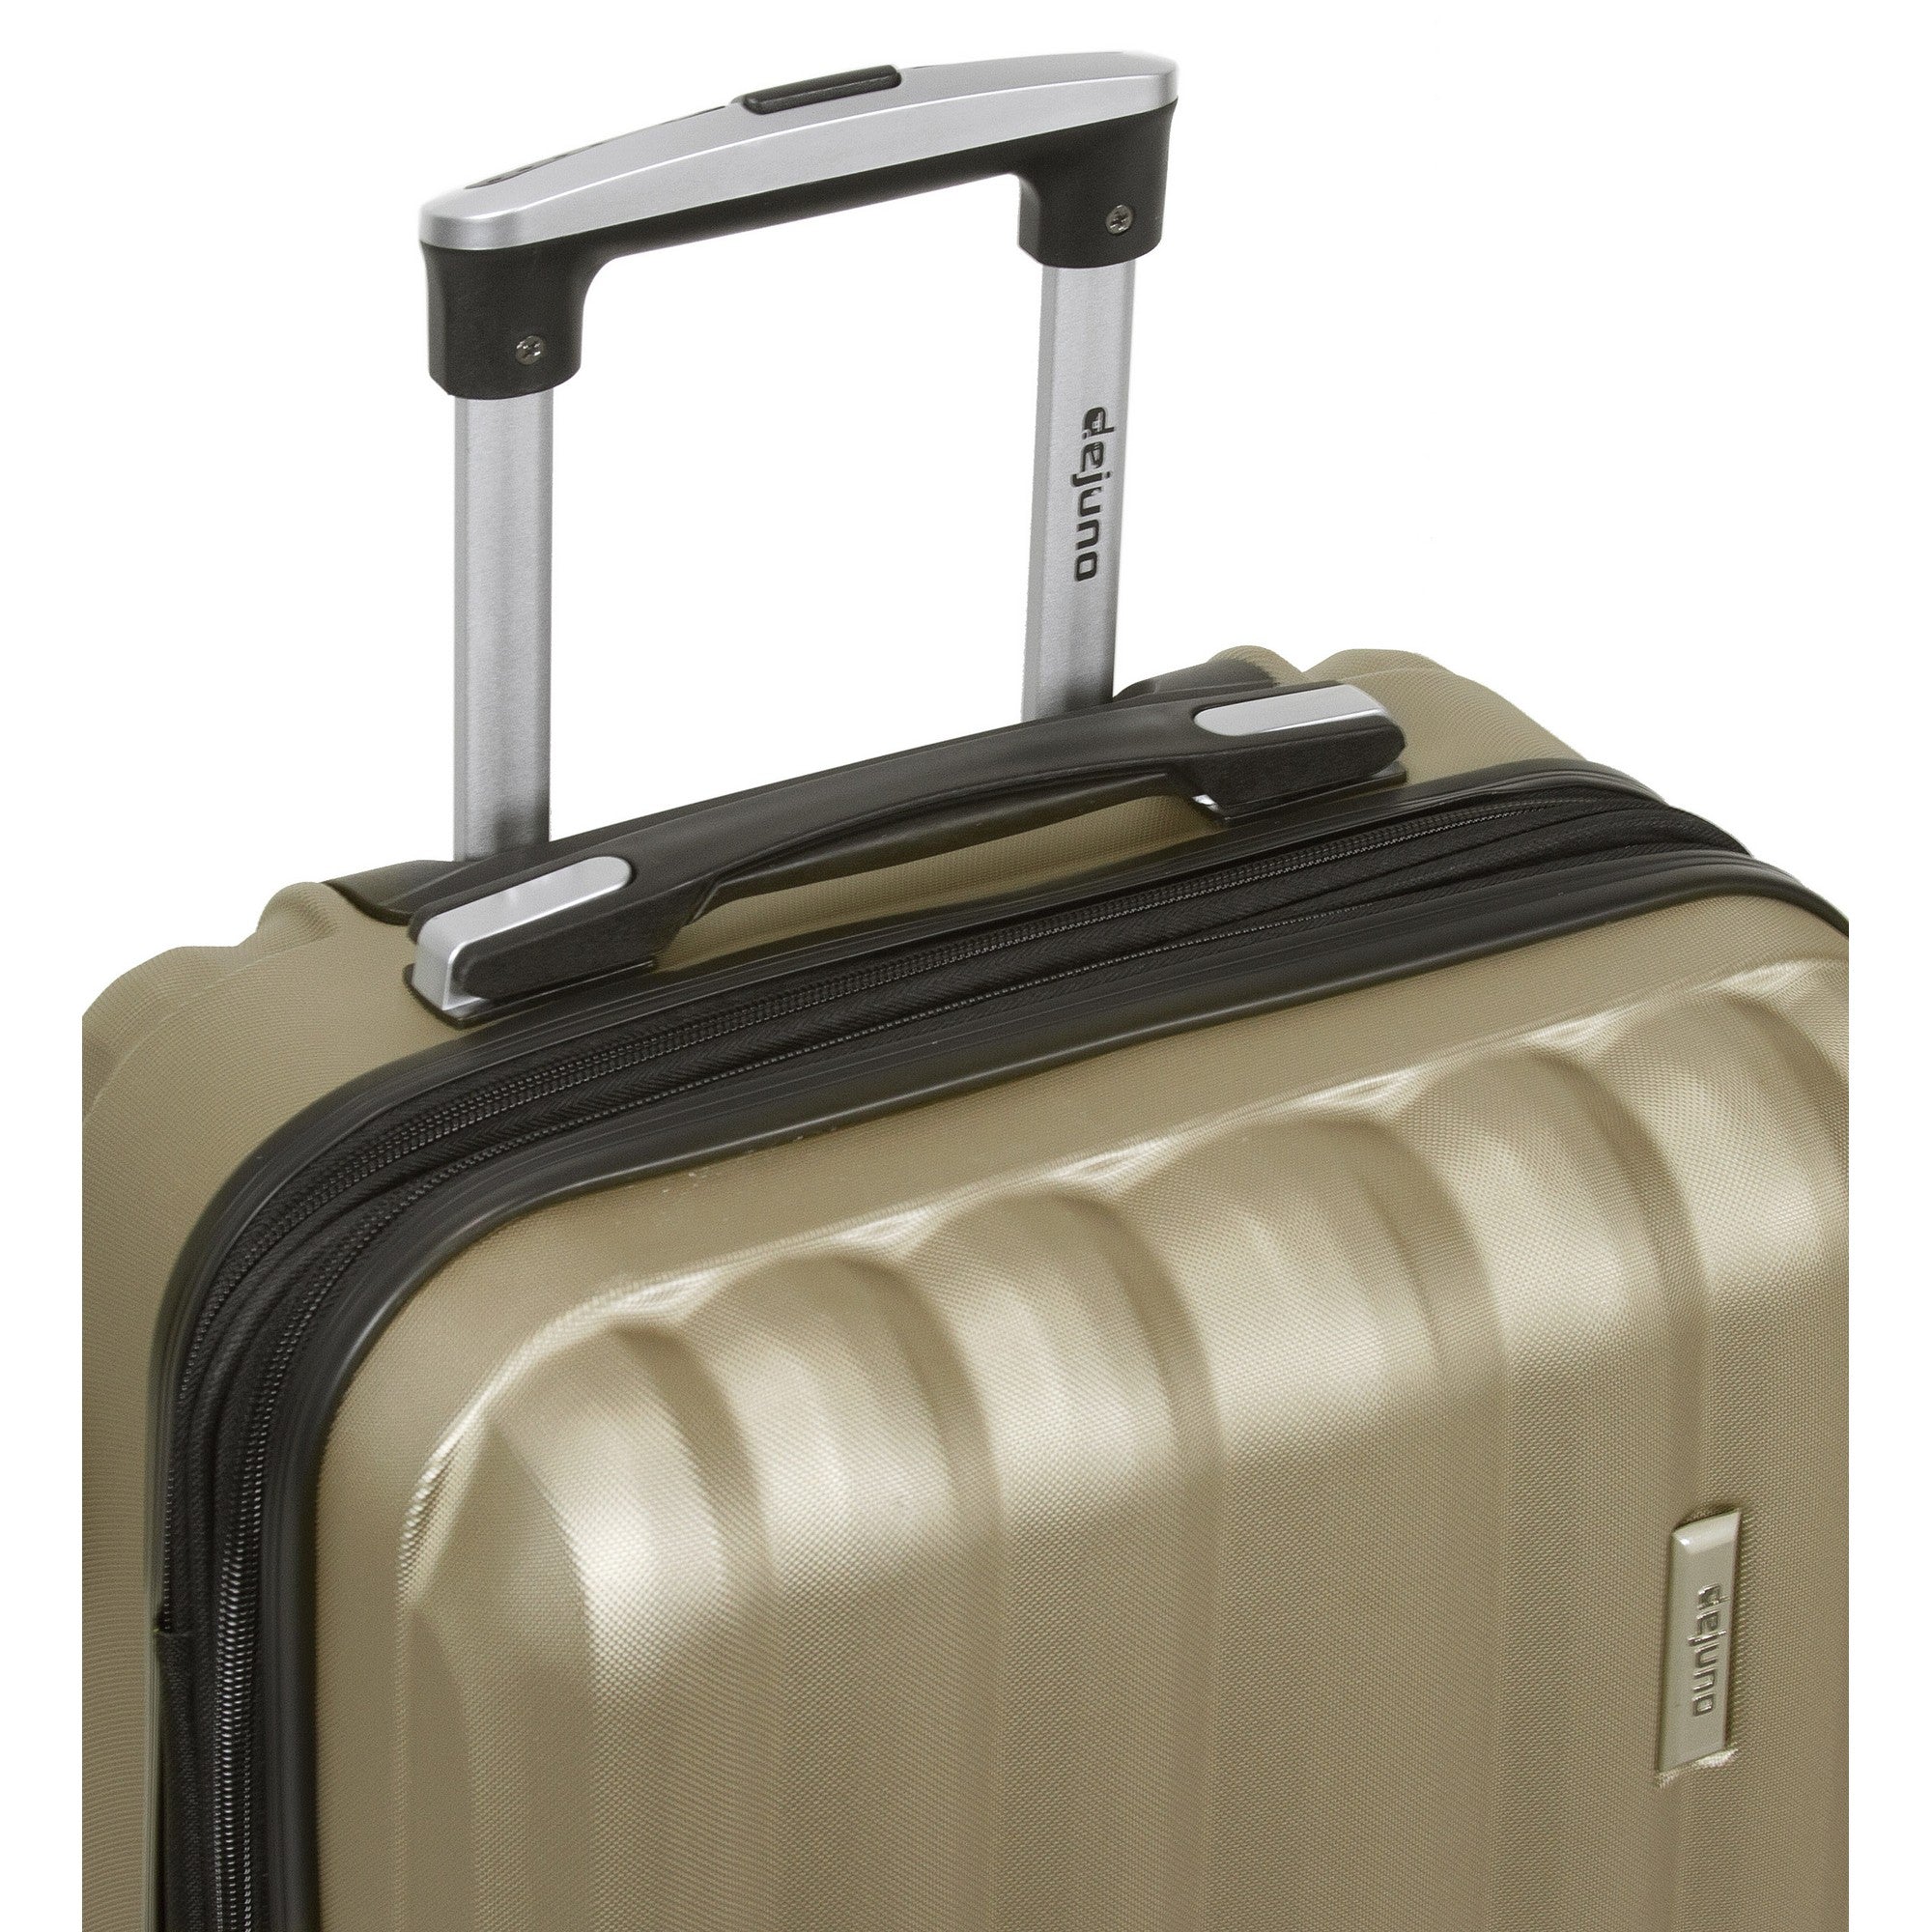 Dejuno Camden Hardside 3-piece Expandable Spinner Luggage Set